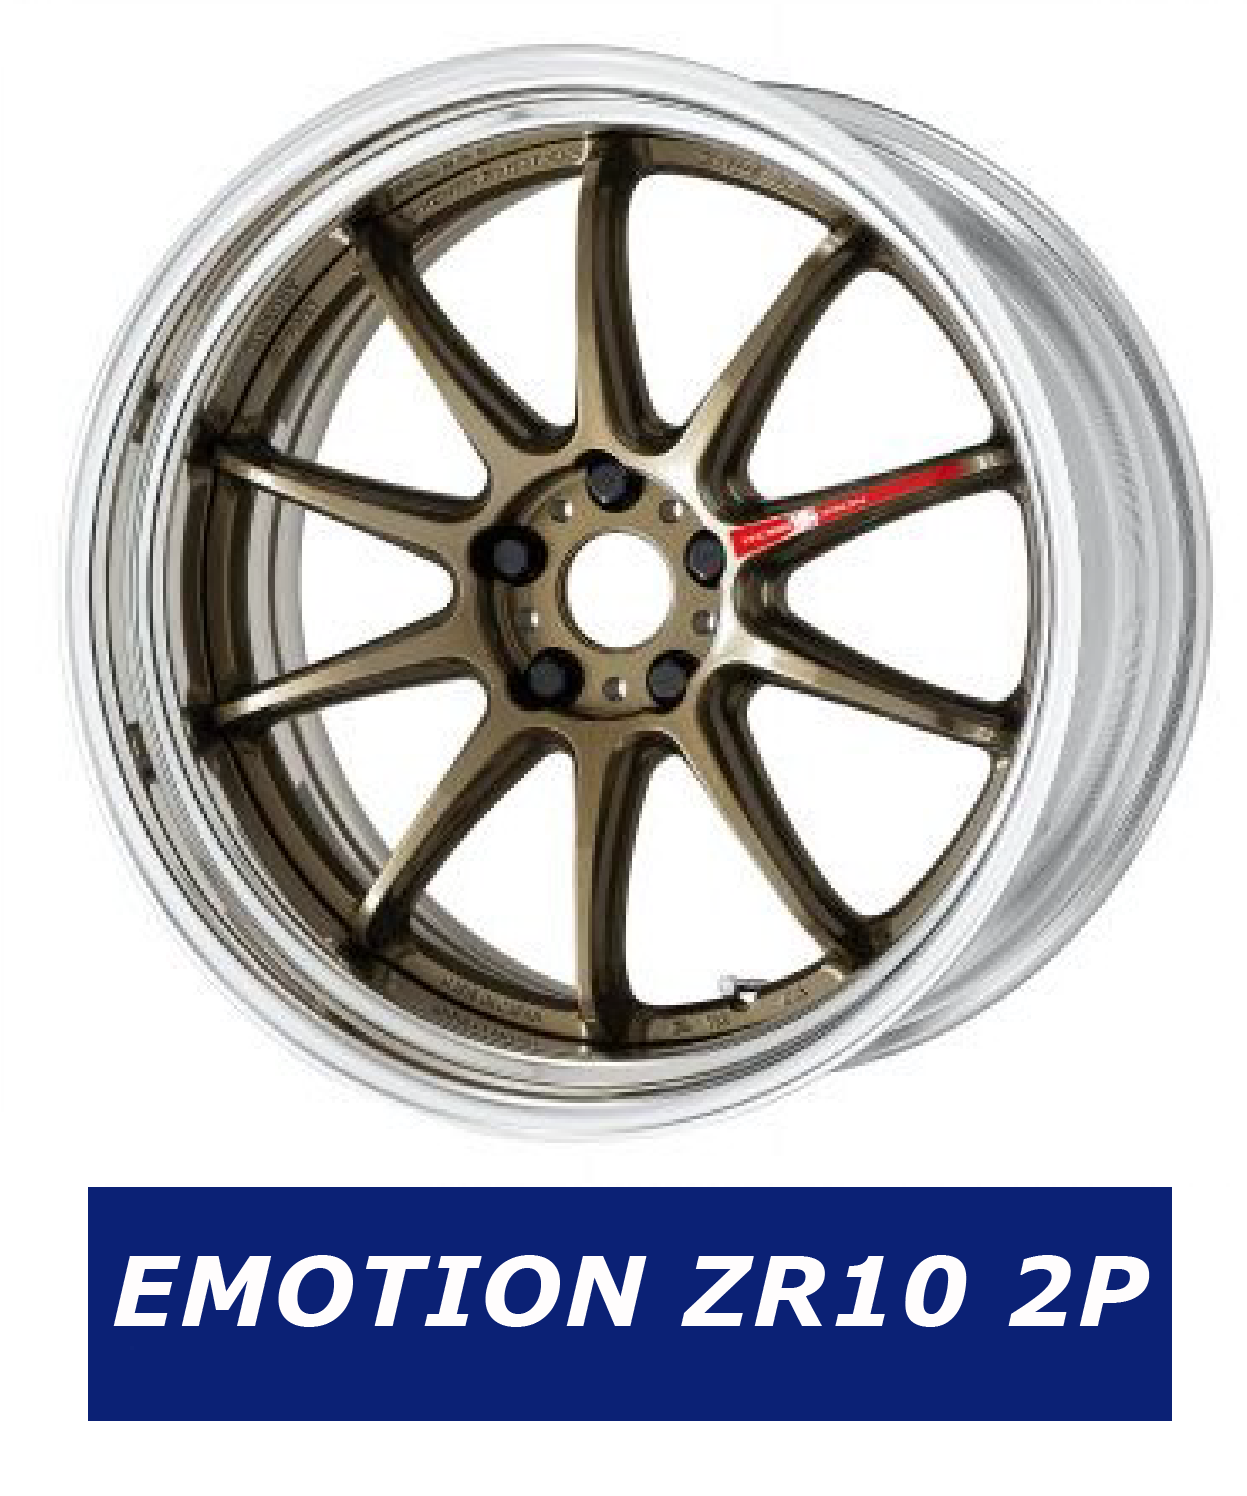 Work wheel france emotion zr10 2p